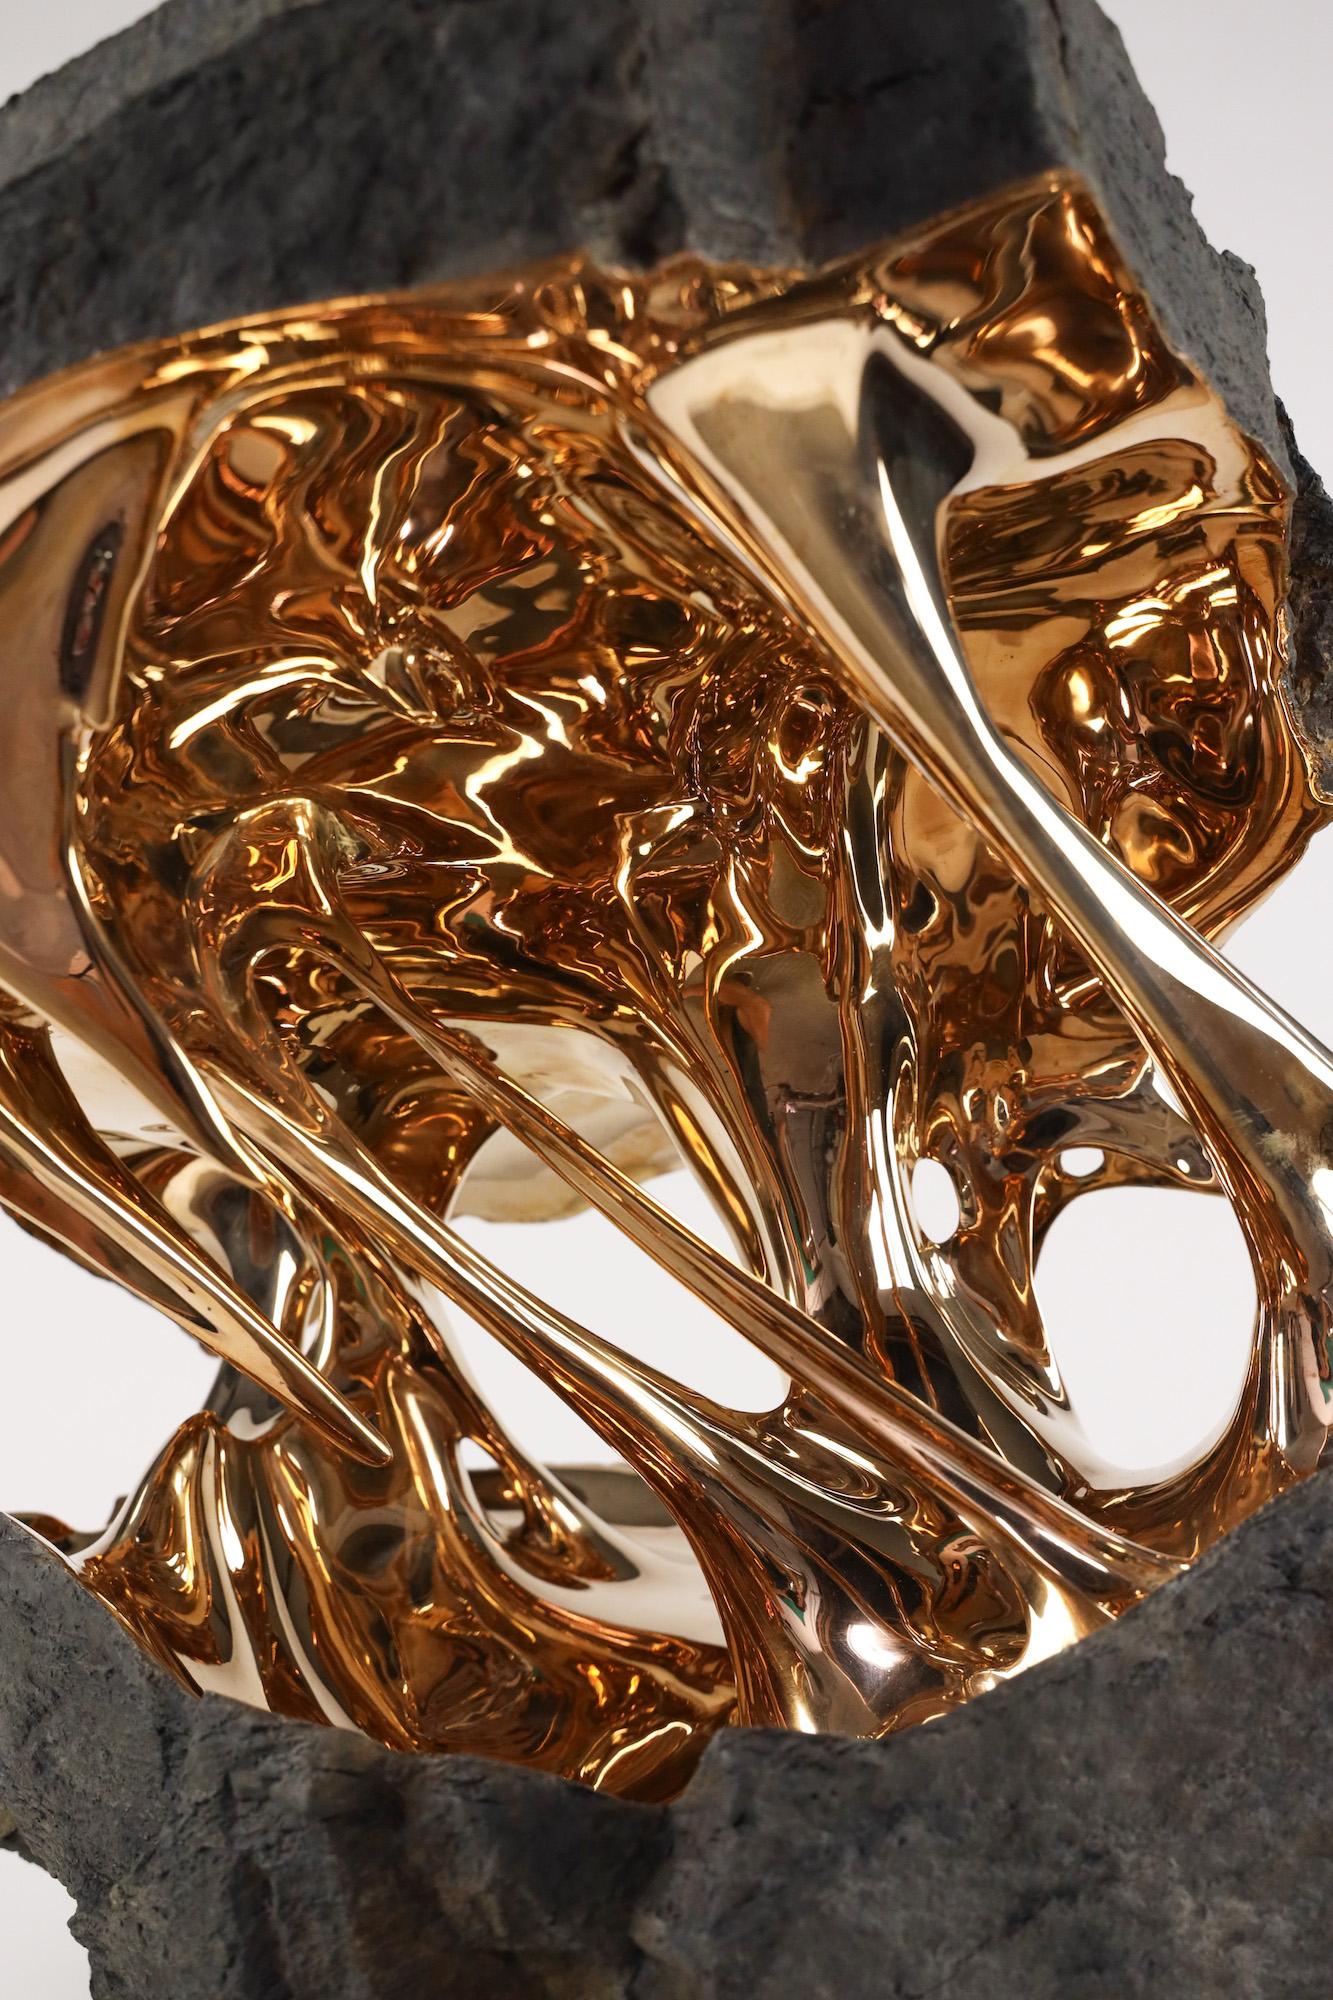 Gaïa by Romain Langlois - Rock-like bronze sculpture, golden, abstract For Sale 8